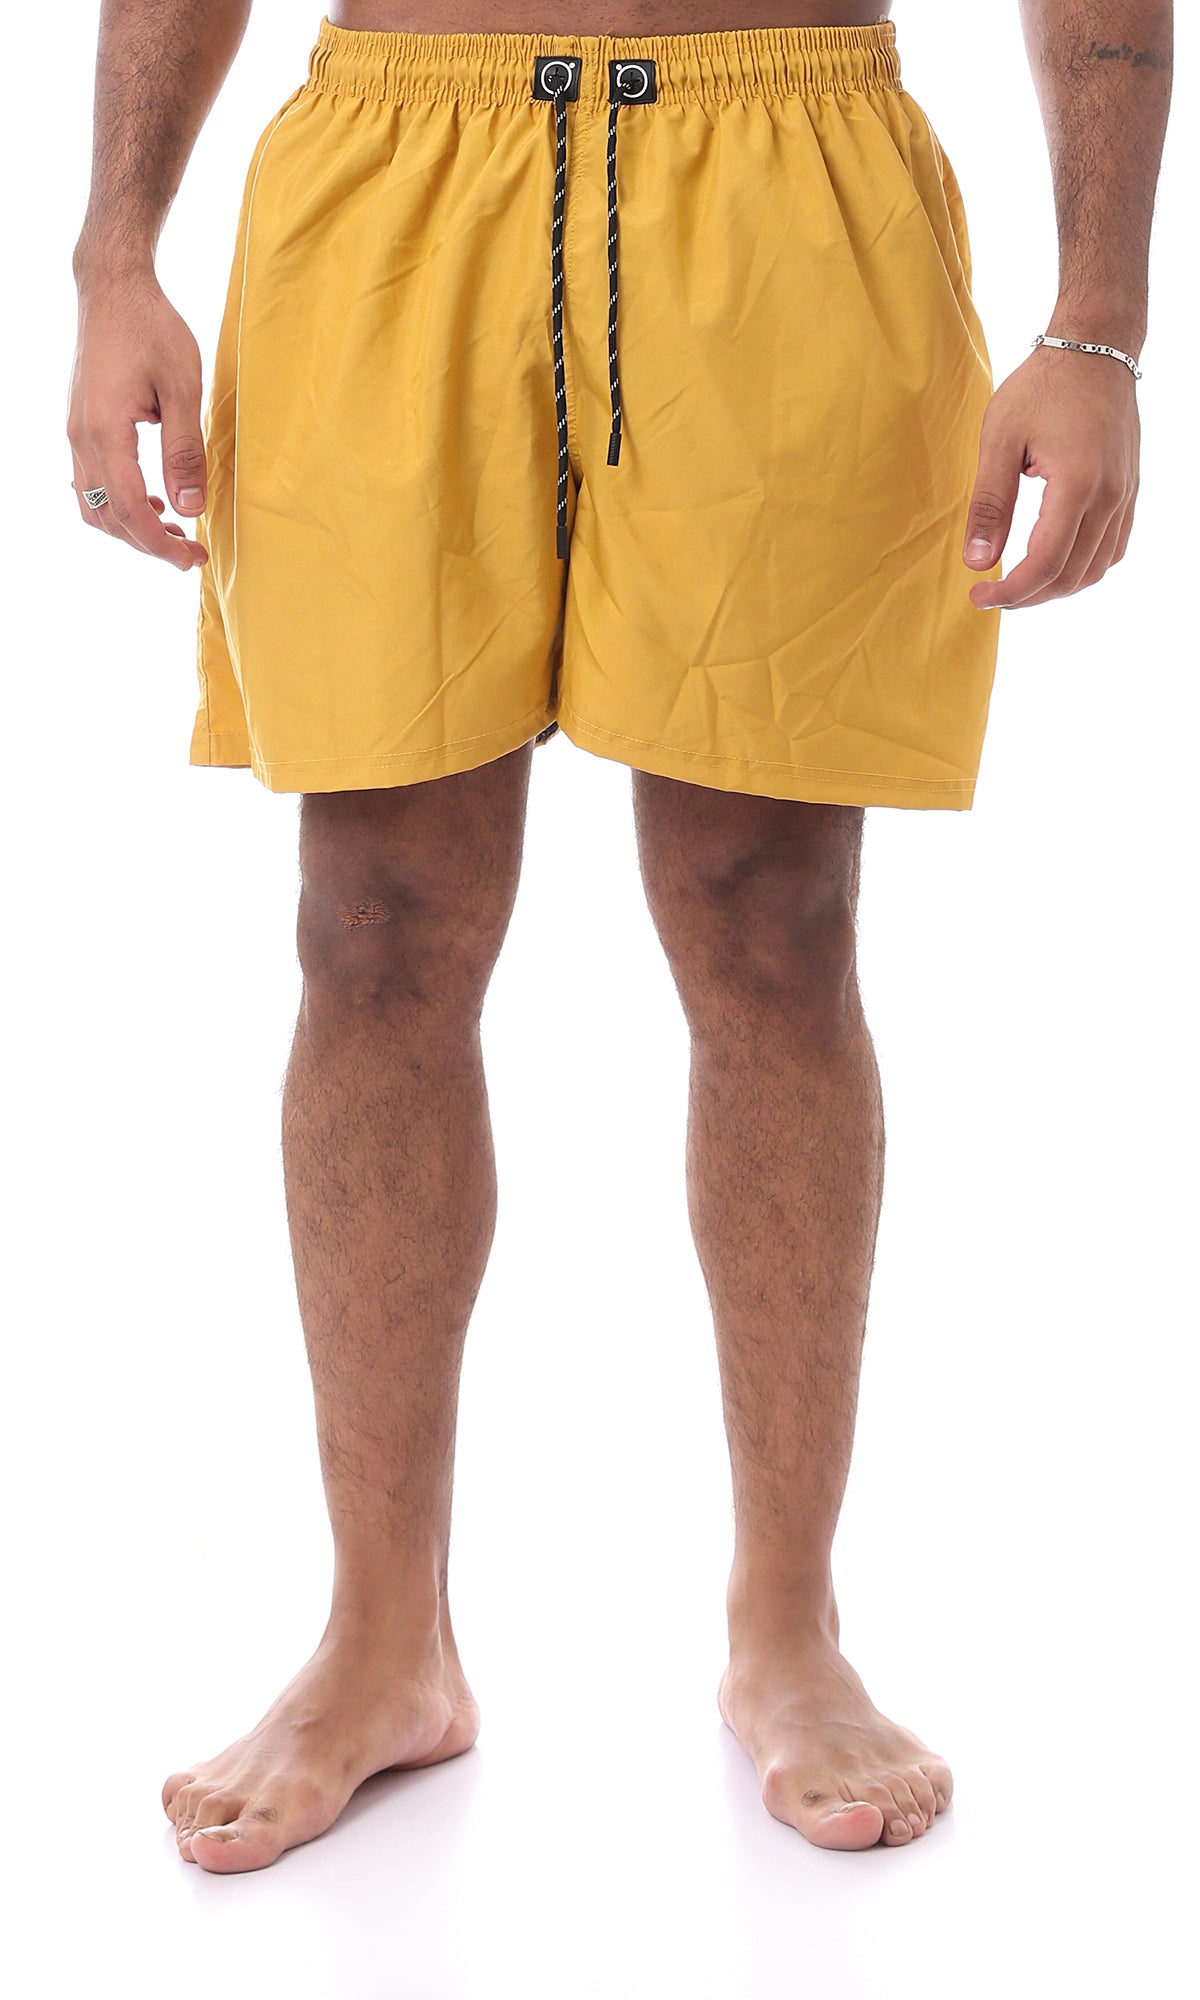 O170438 Solid Mustard Slip On Board Shorts With Drawstrings